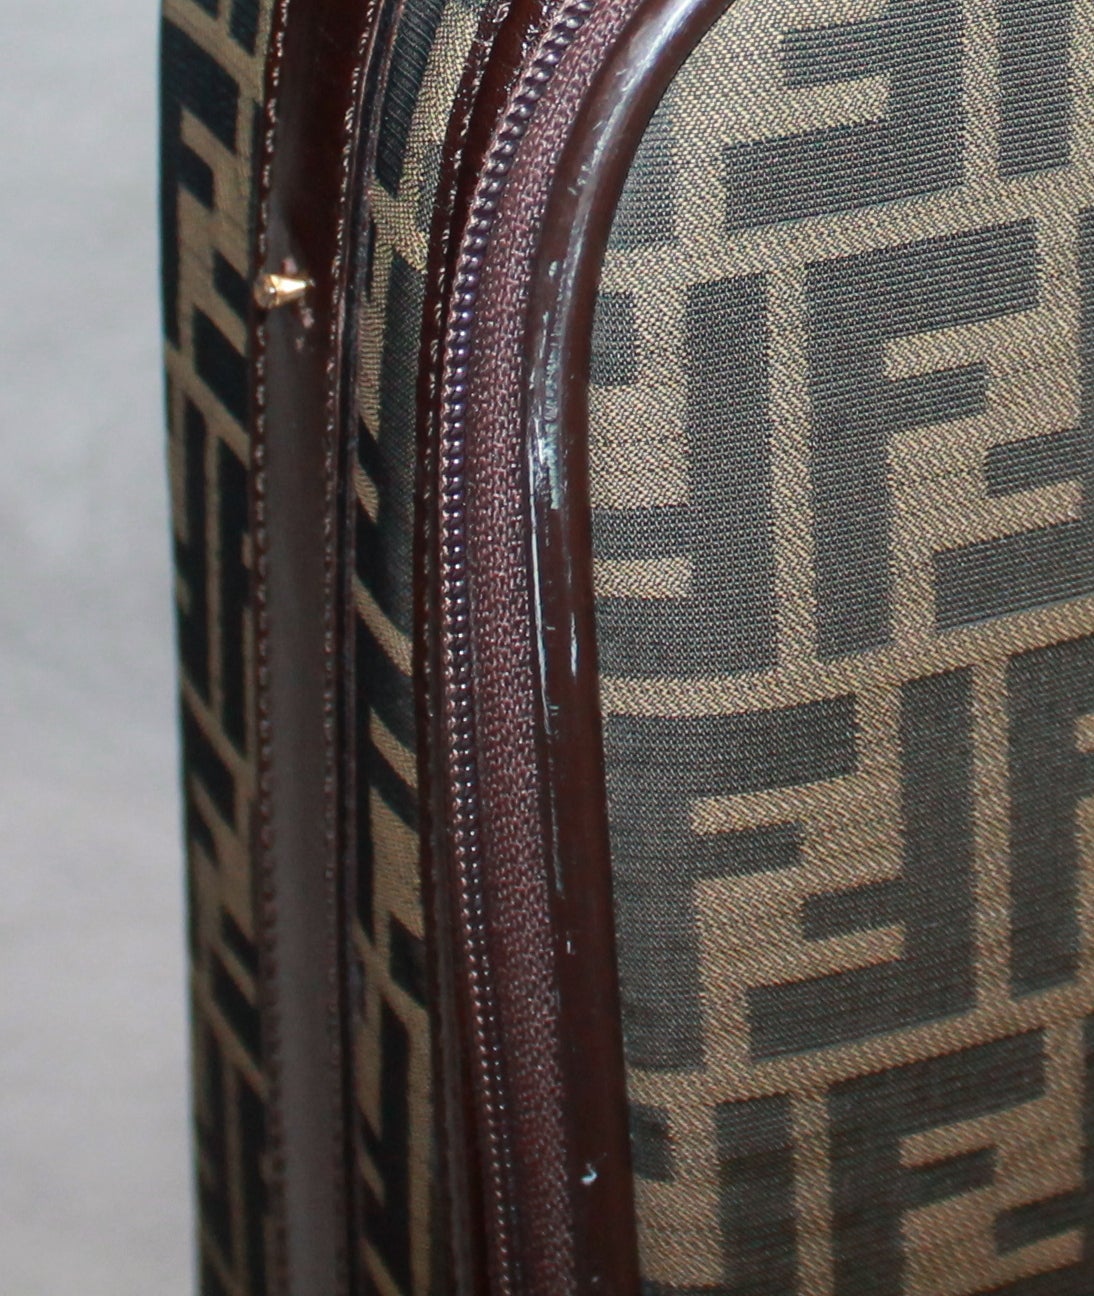 Black Fendi Monogram Printed Suitcase with Leather Handle & Trim